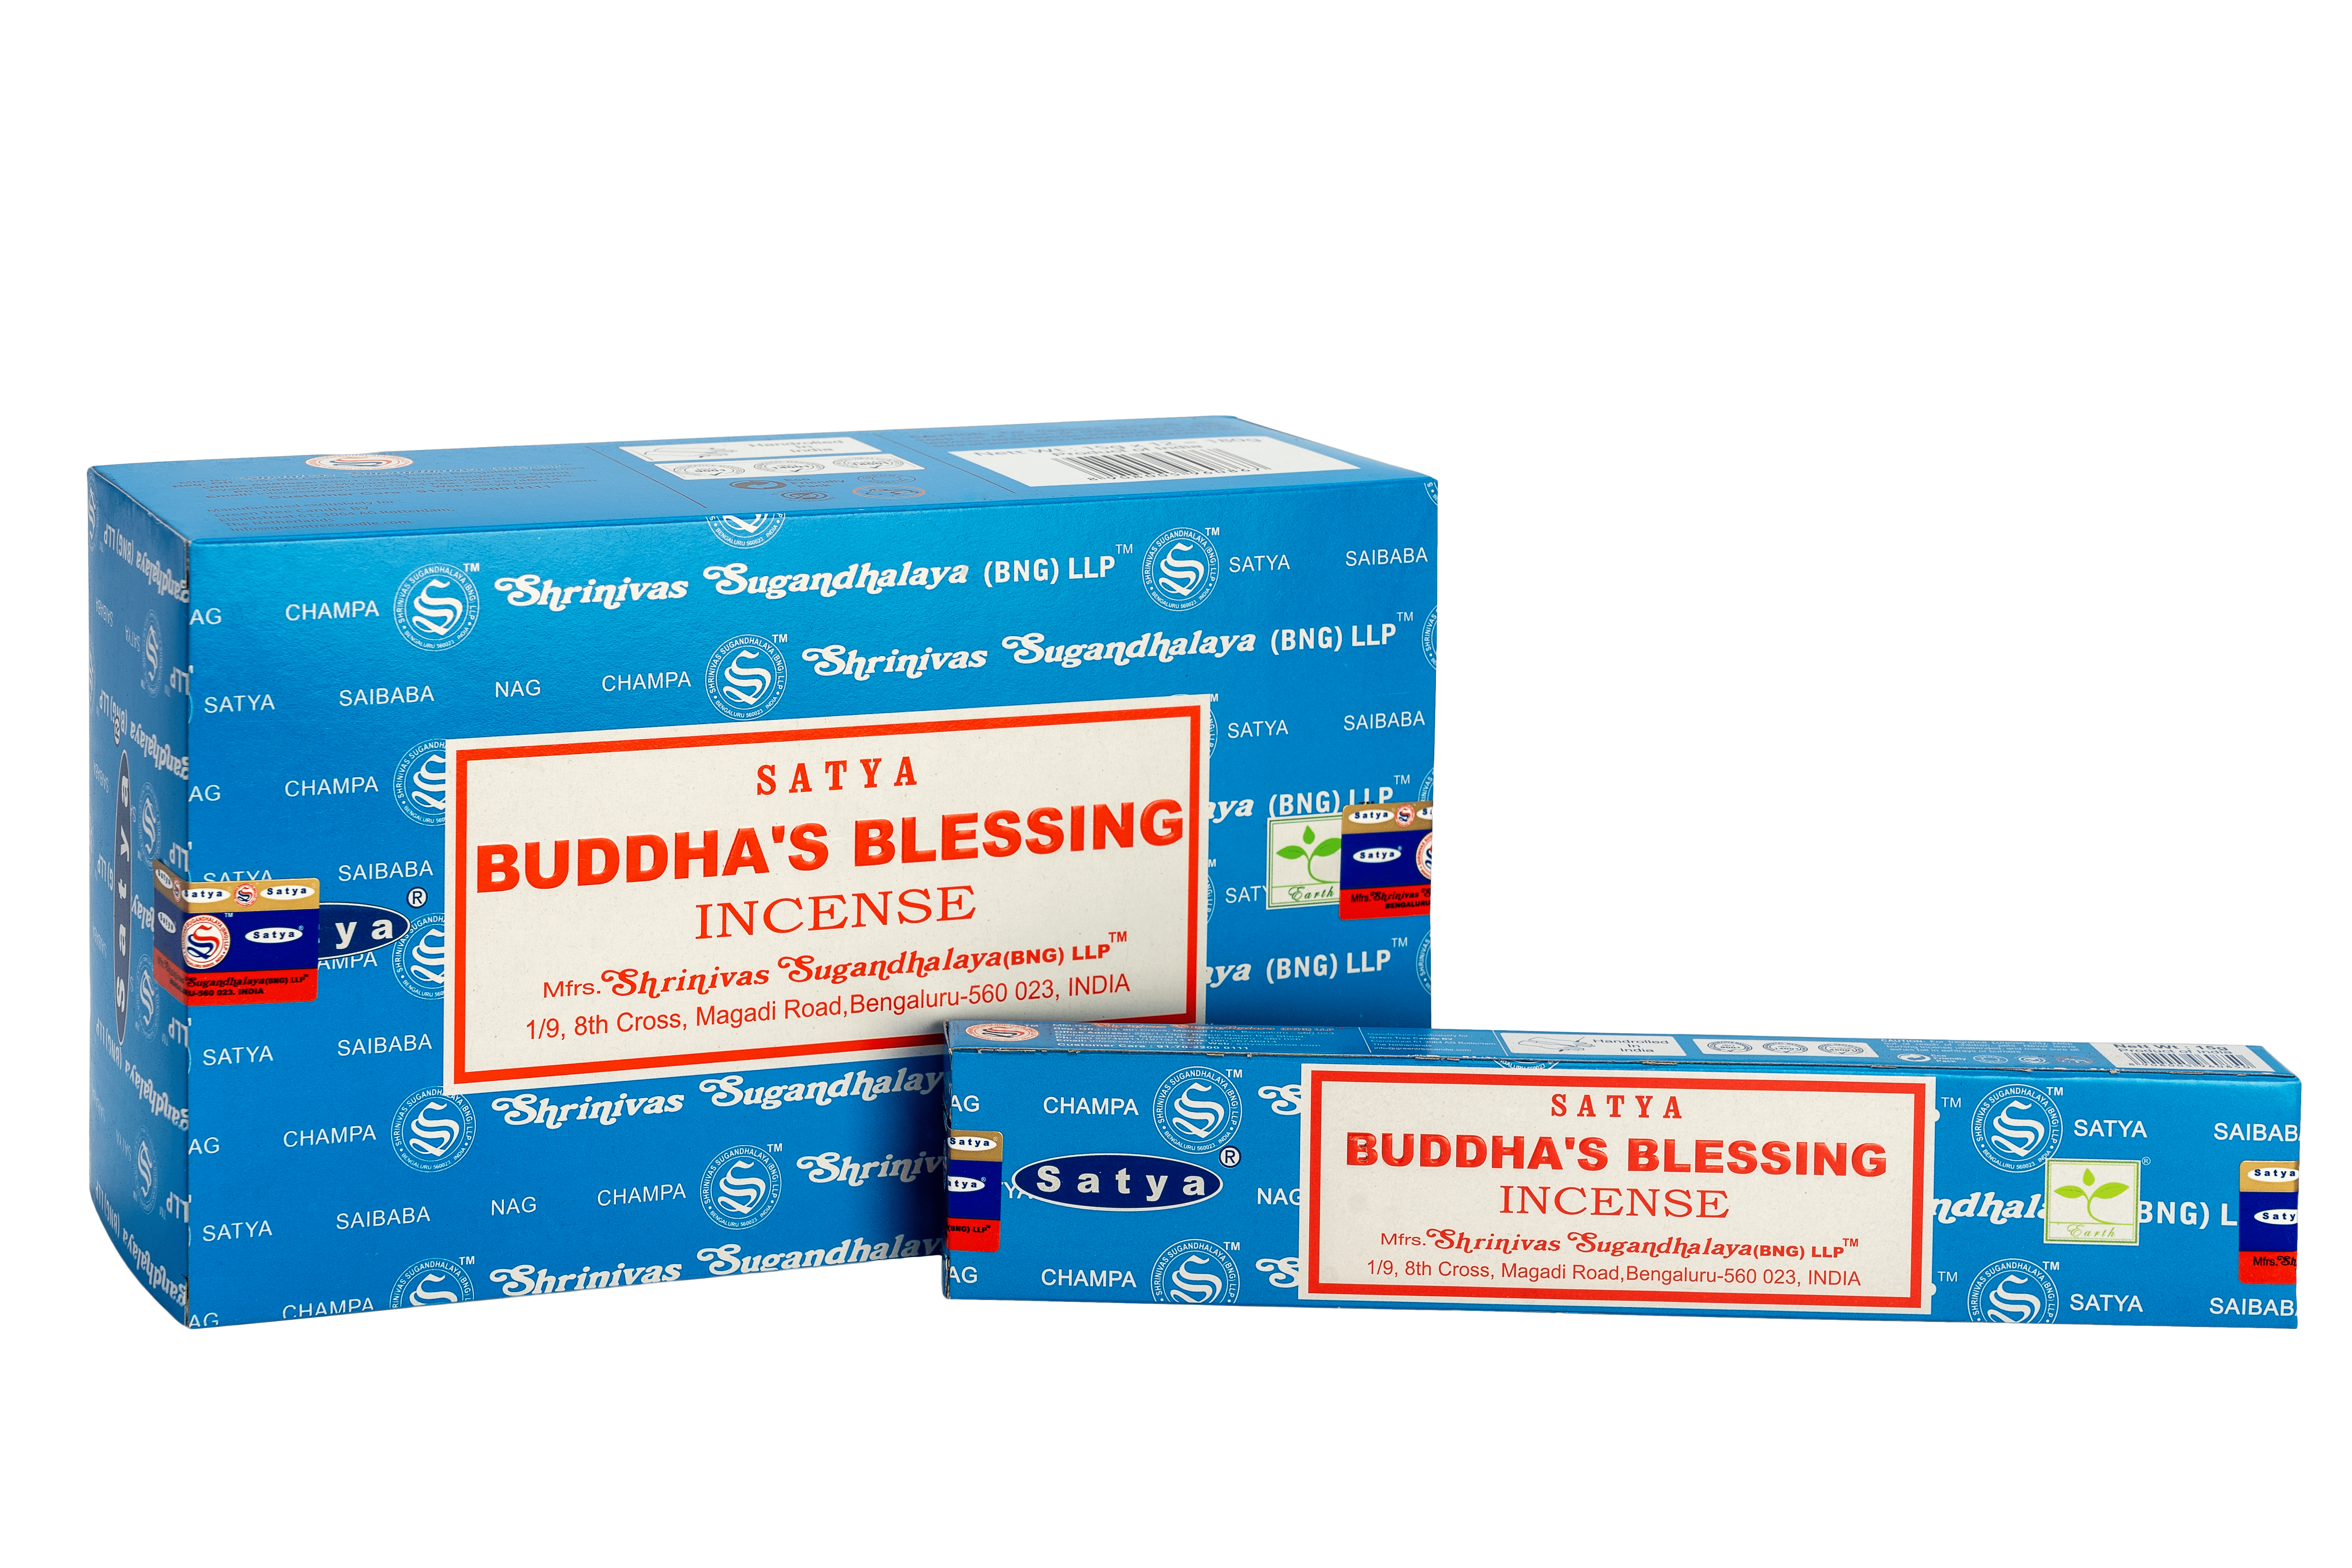 SATYA BUDDHA’S BLESSING 15G (BNG) (BBR) – 12PK